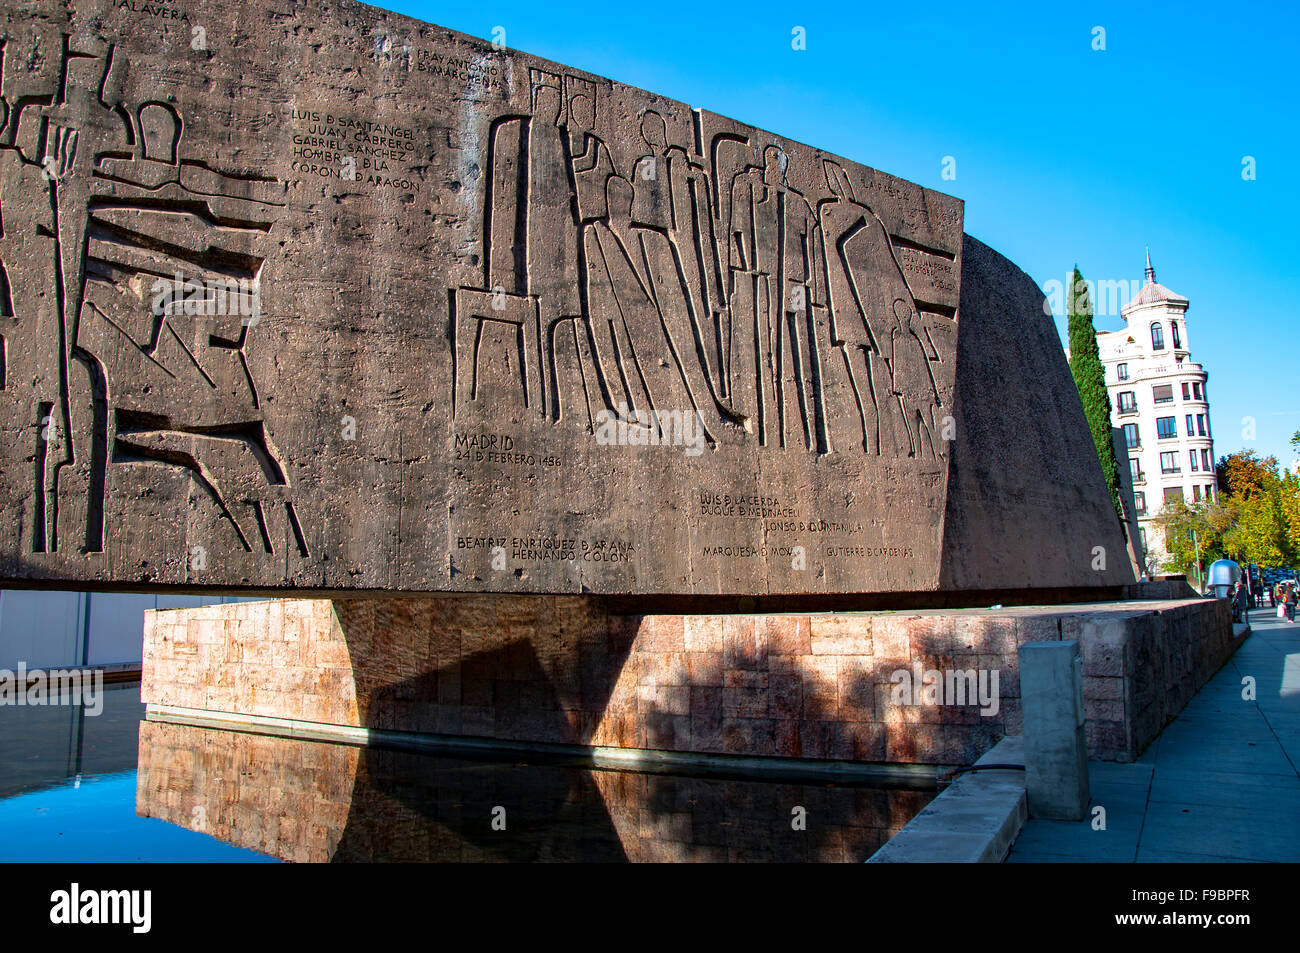 Monumento al Descubrimiento de América, Plaza Colón, Madrid, Spain Stock Photo